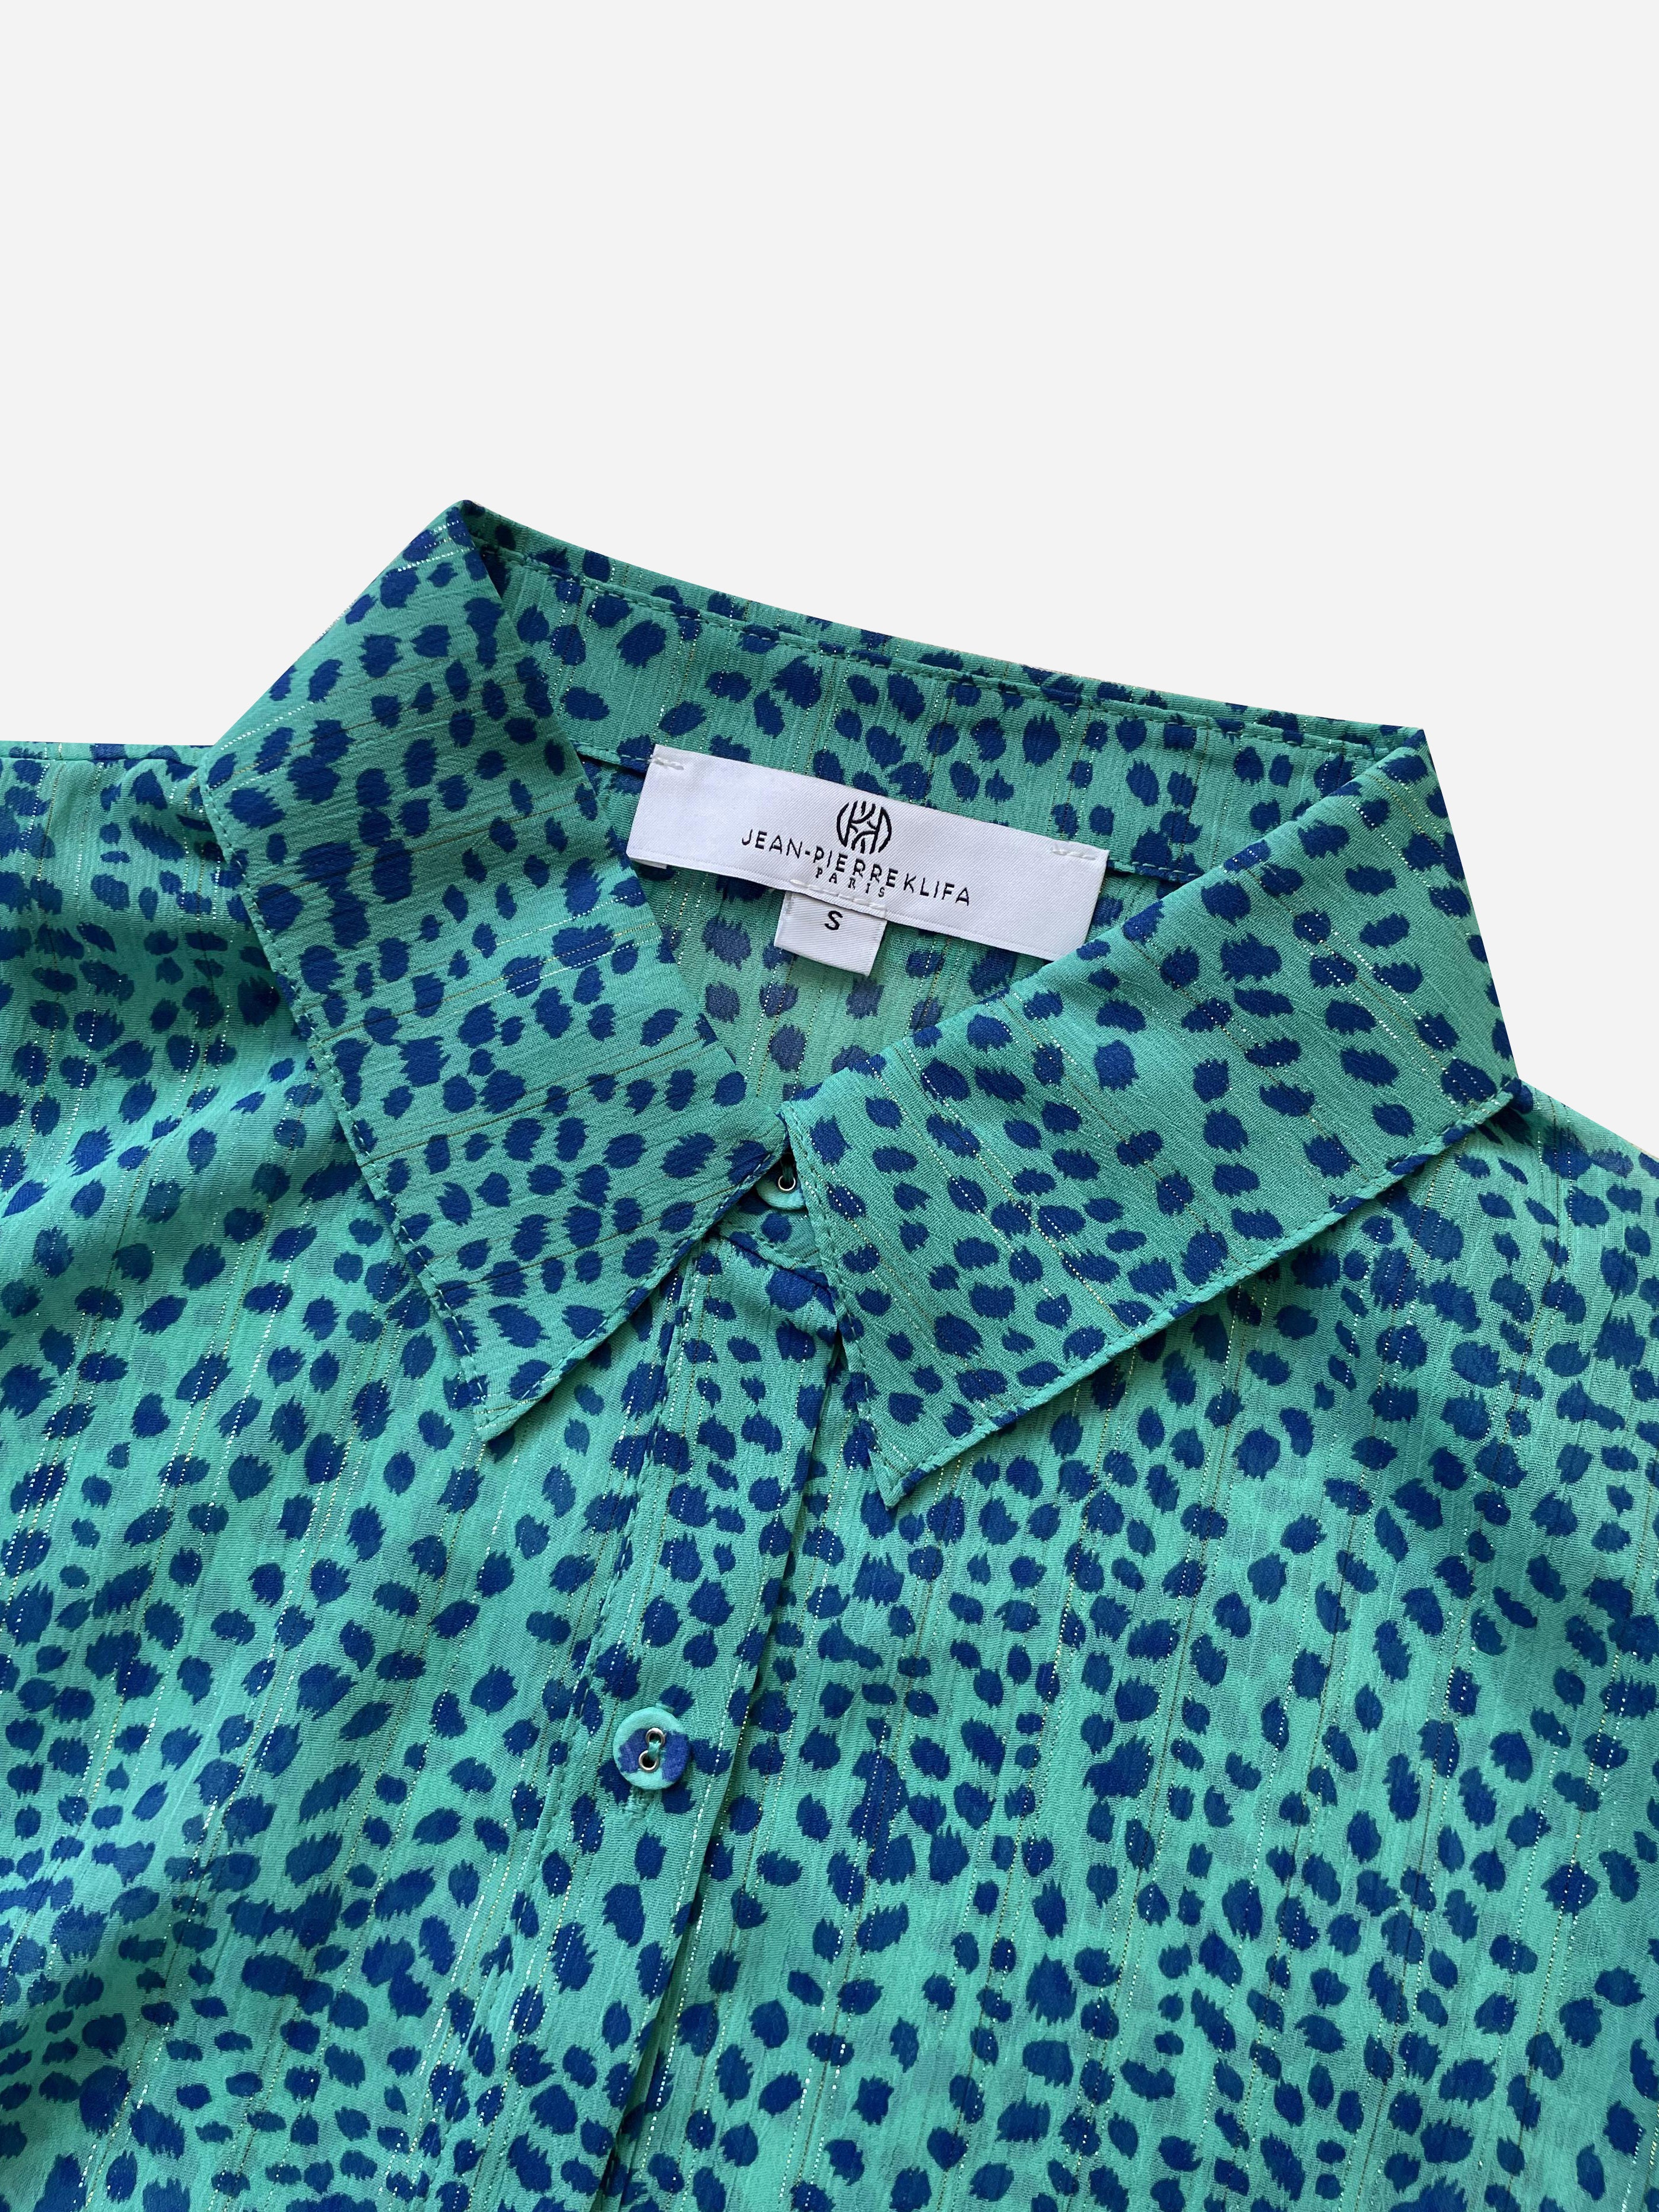 Checkered Shirt Wild Dots Aqua Tops Jean-Pierre Klifa   